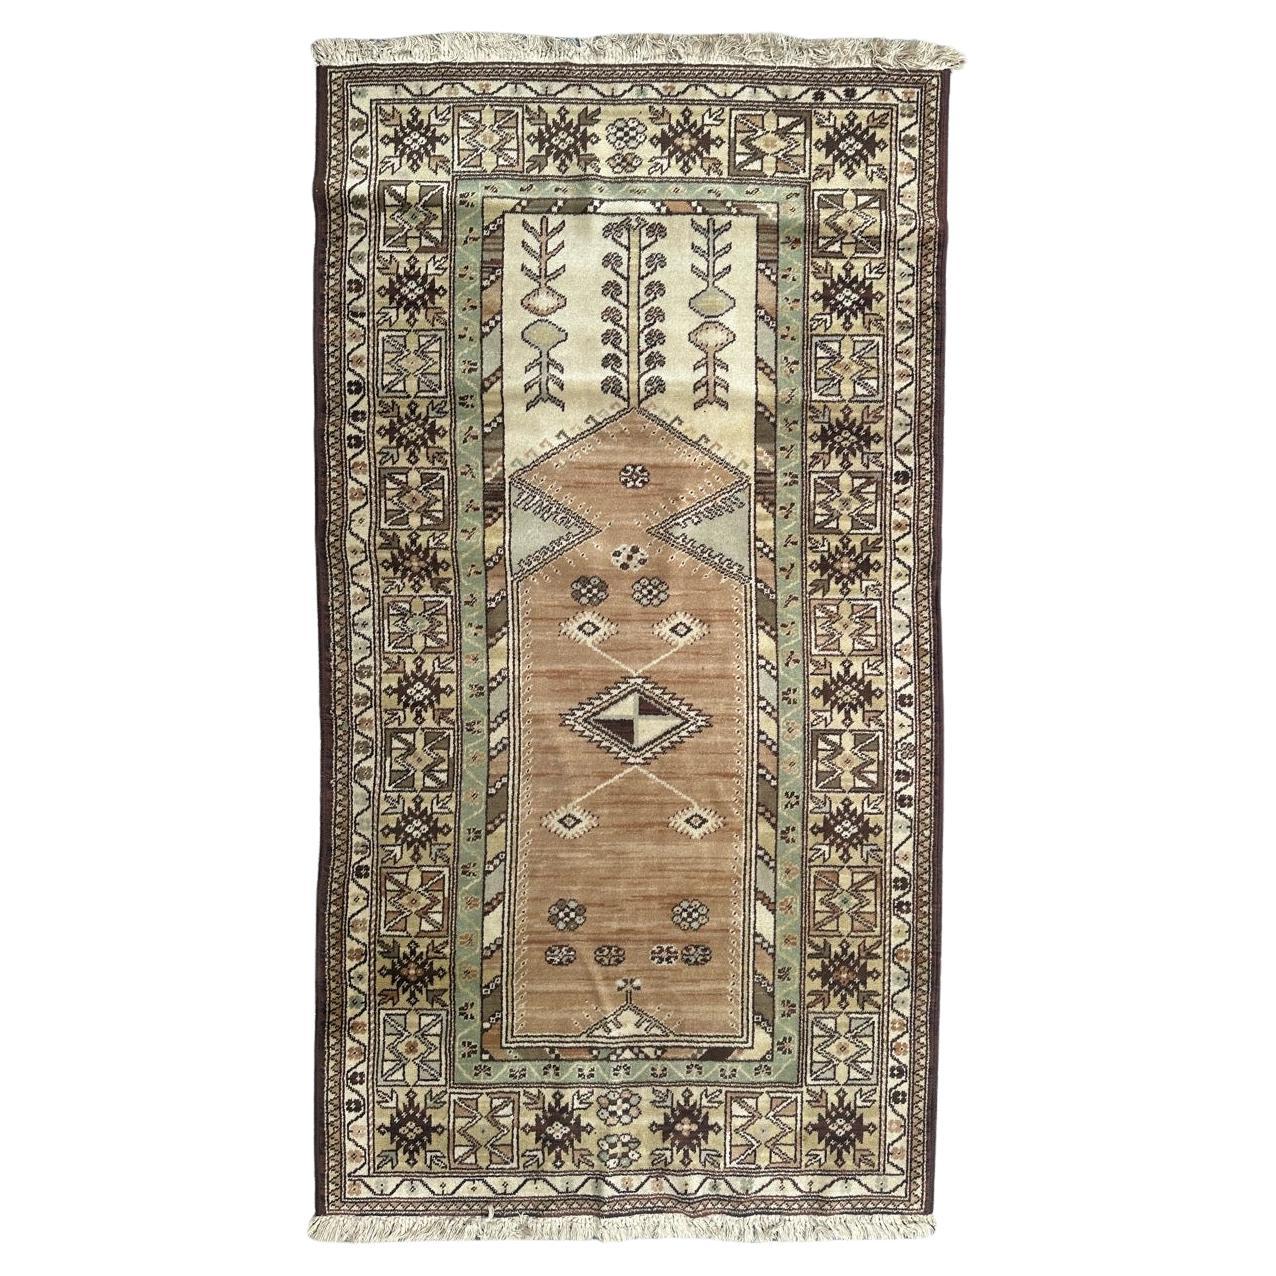 Bobyrug’s pretty vintage Turkish style rug For Sale